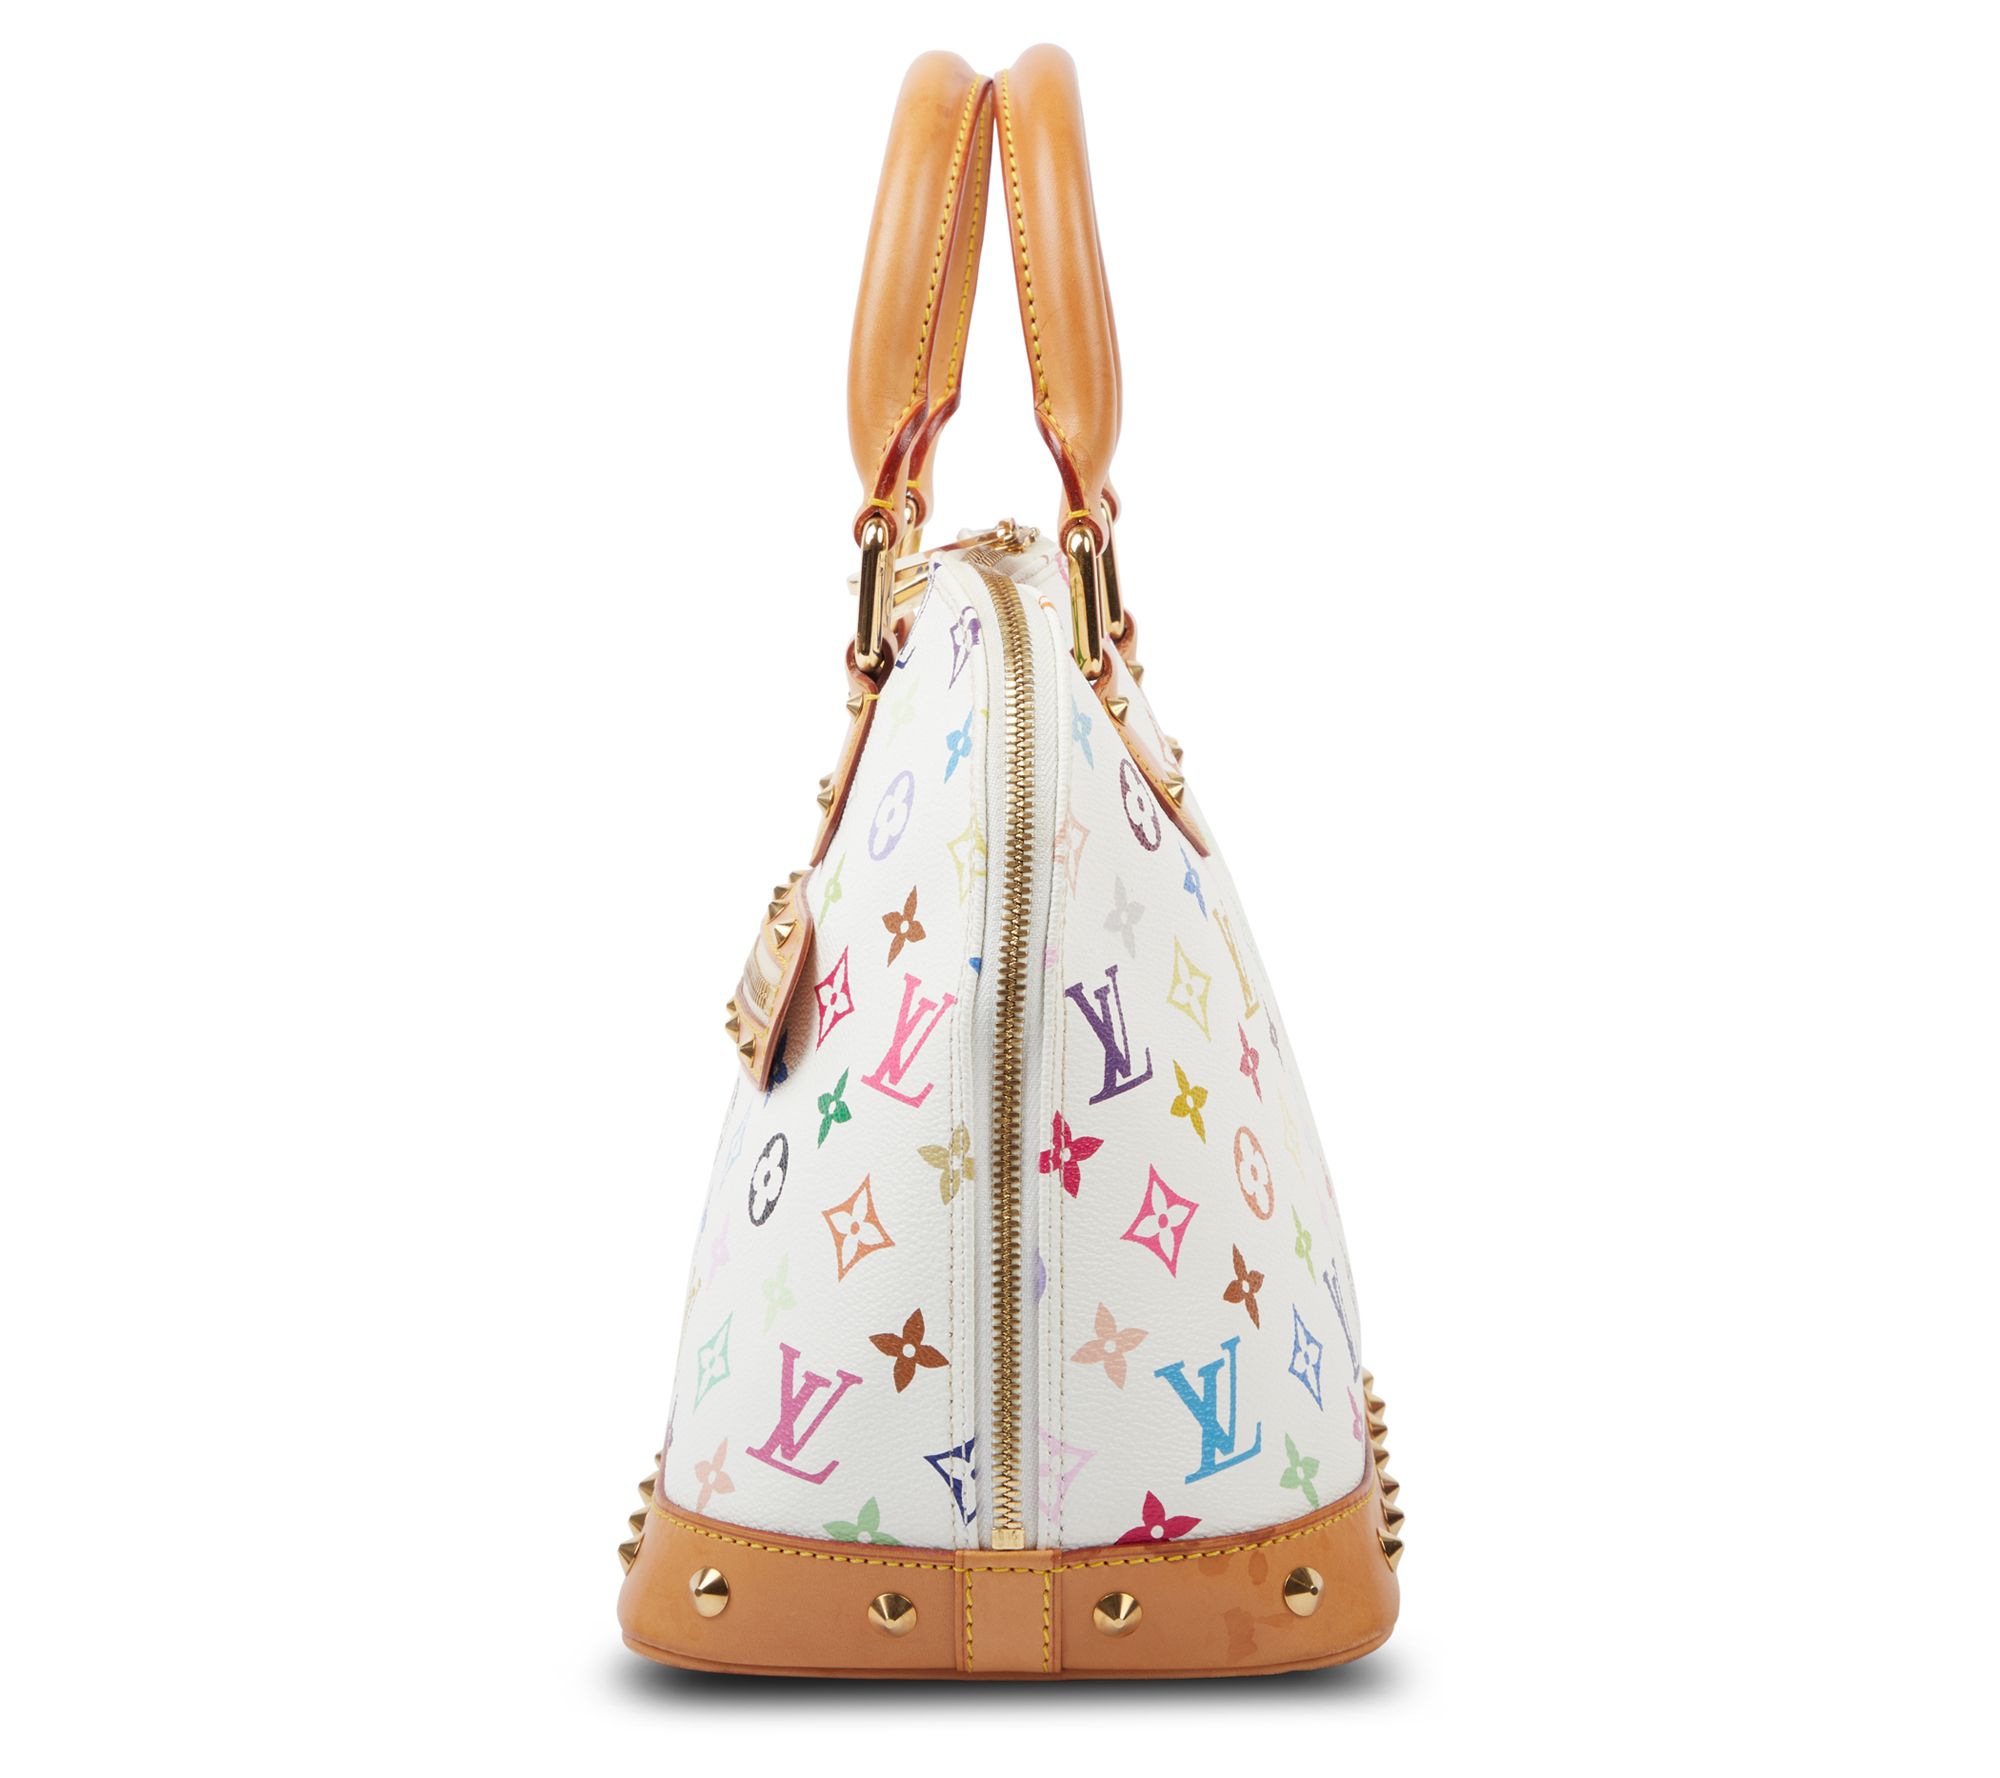 Tote Bag Organizer For Louis Vuitton Berri PM Bag with Single Bottle H